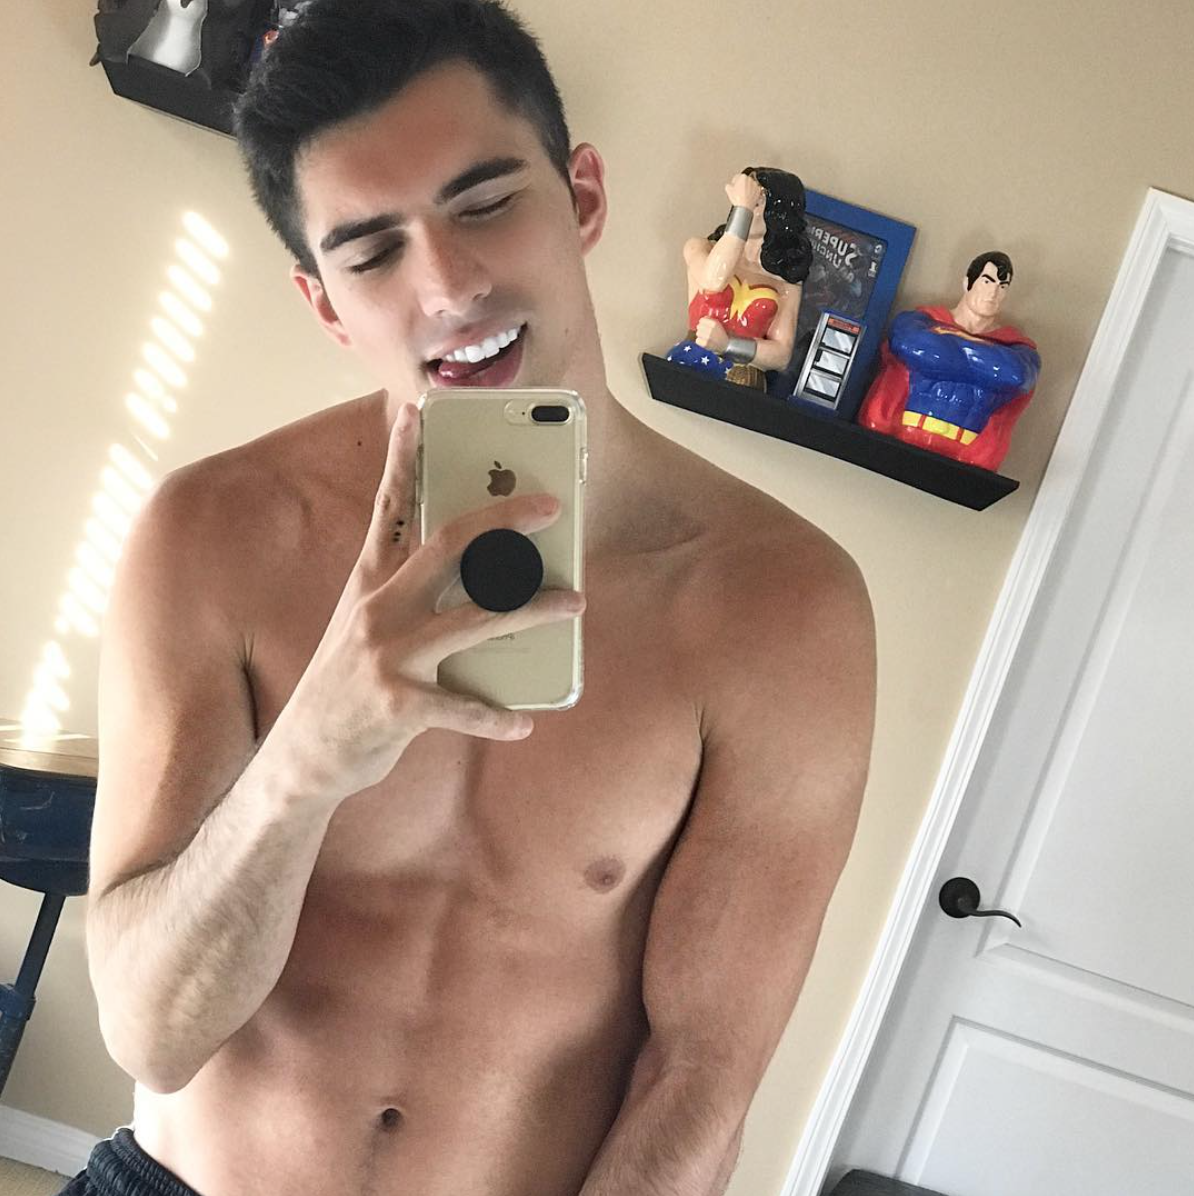 El youtuber Joey Gentile se desnuda en Instagram - Shangay.